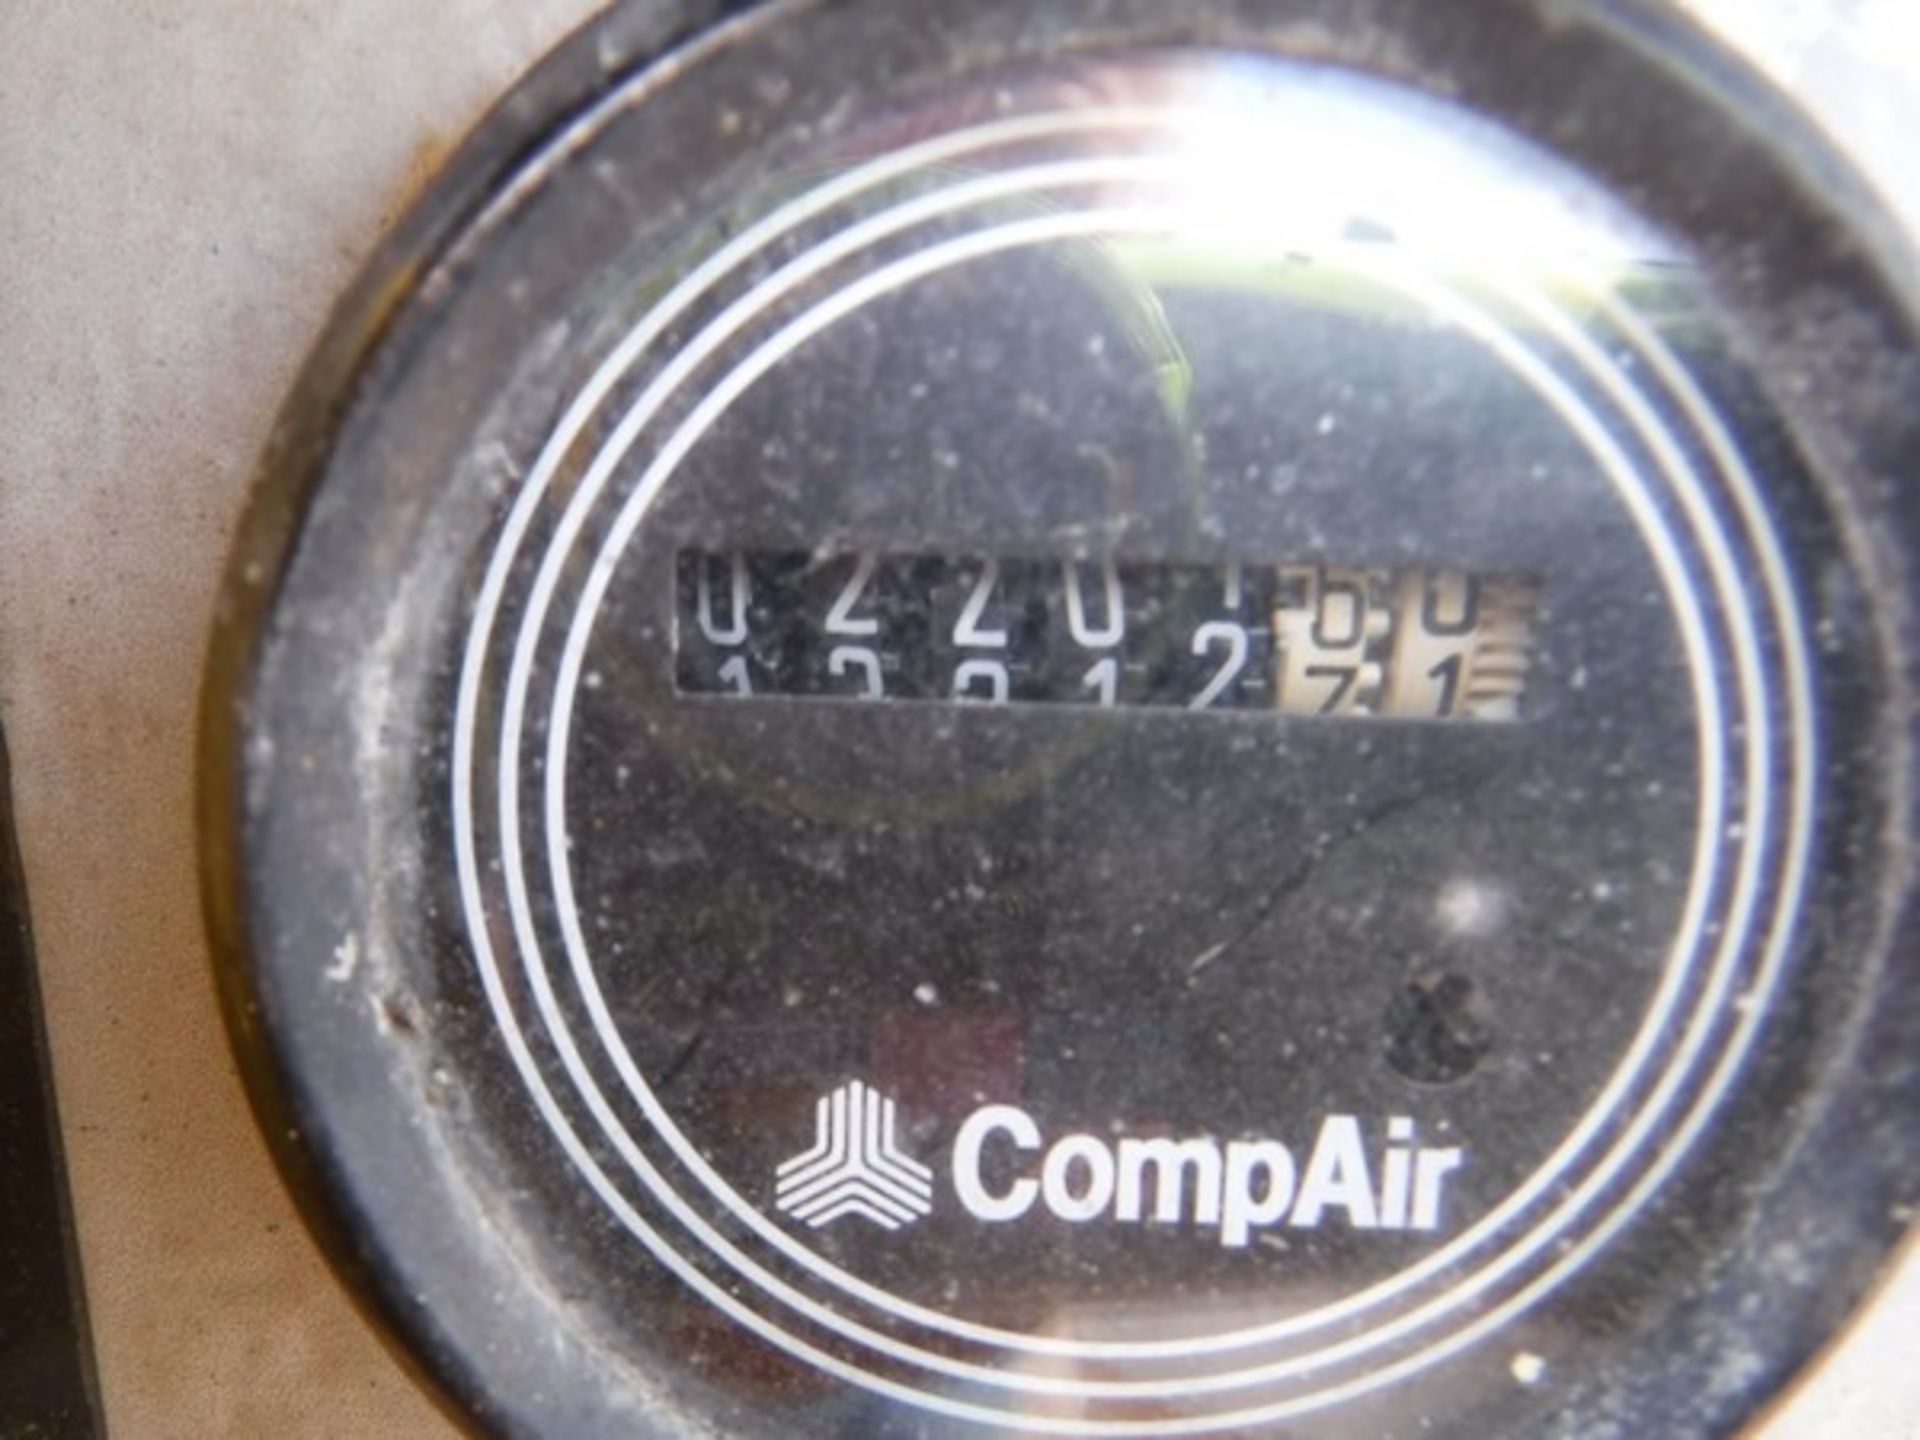 2002 COMPAIR DLT0404 2 tool compressor 2207hrs (not verified) - Bild 4 aus 5